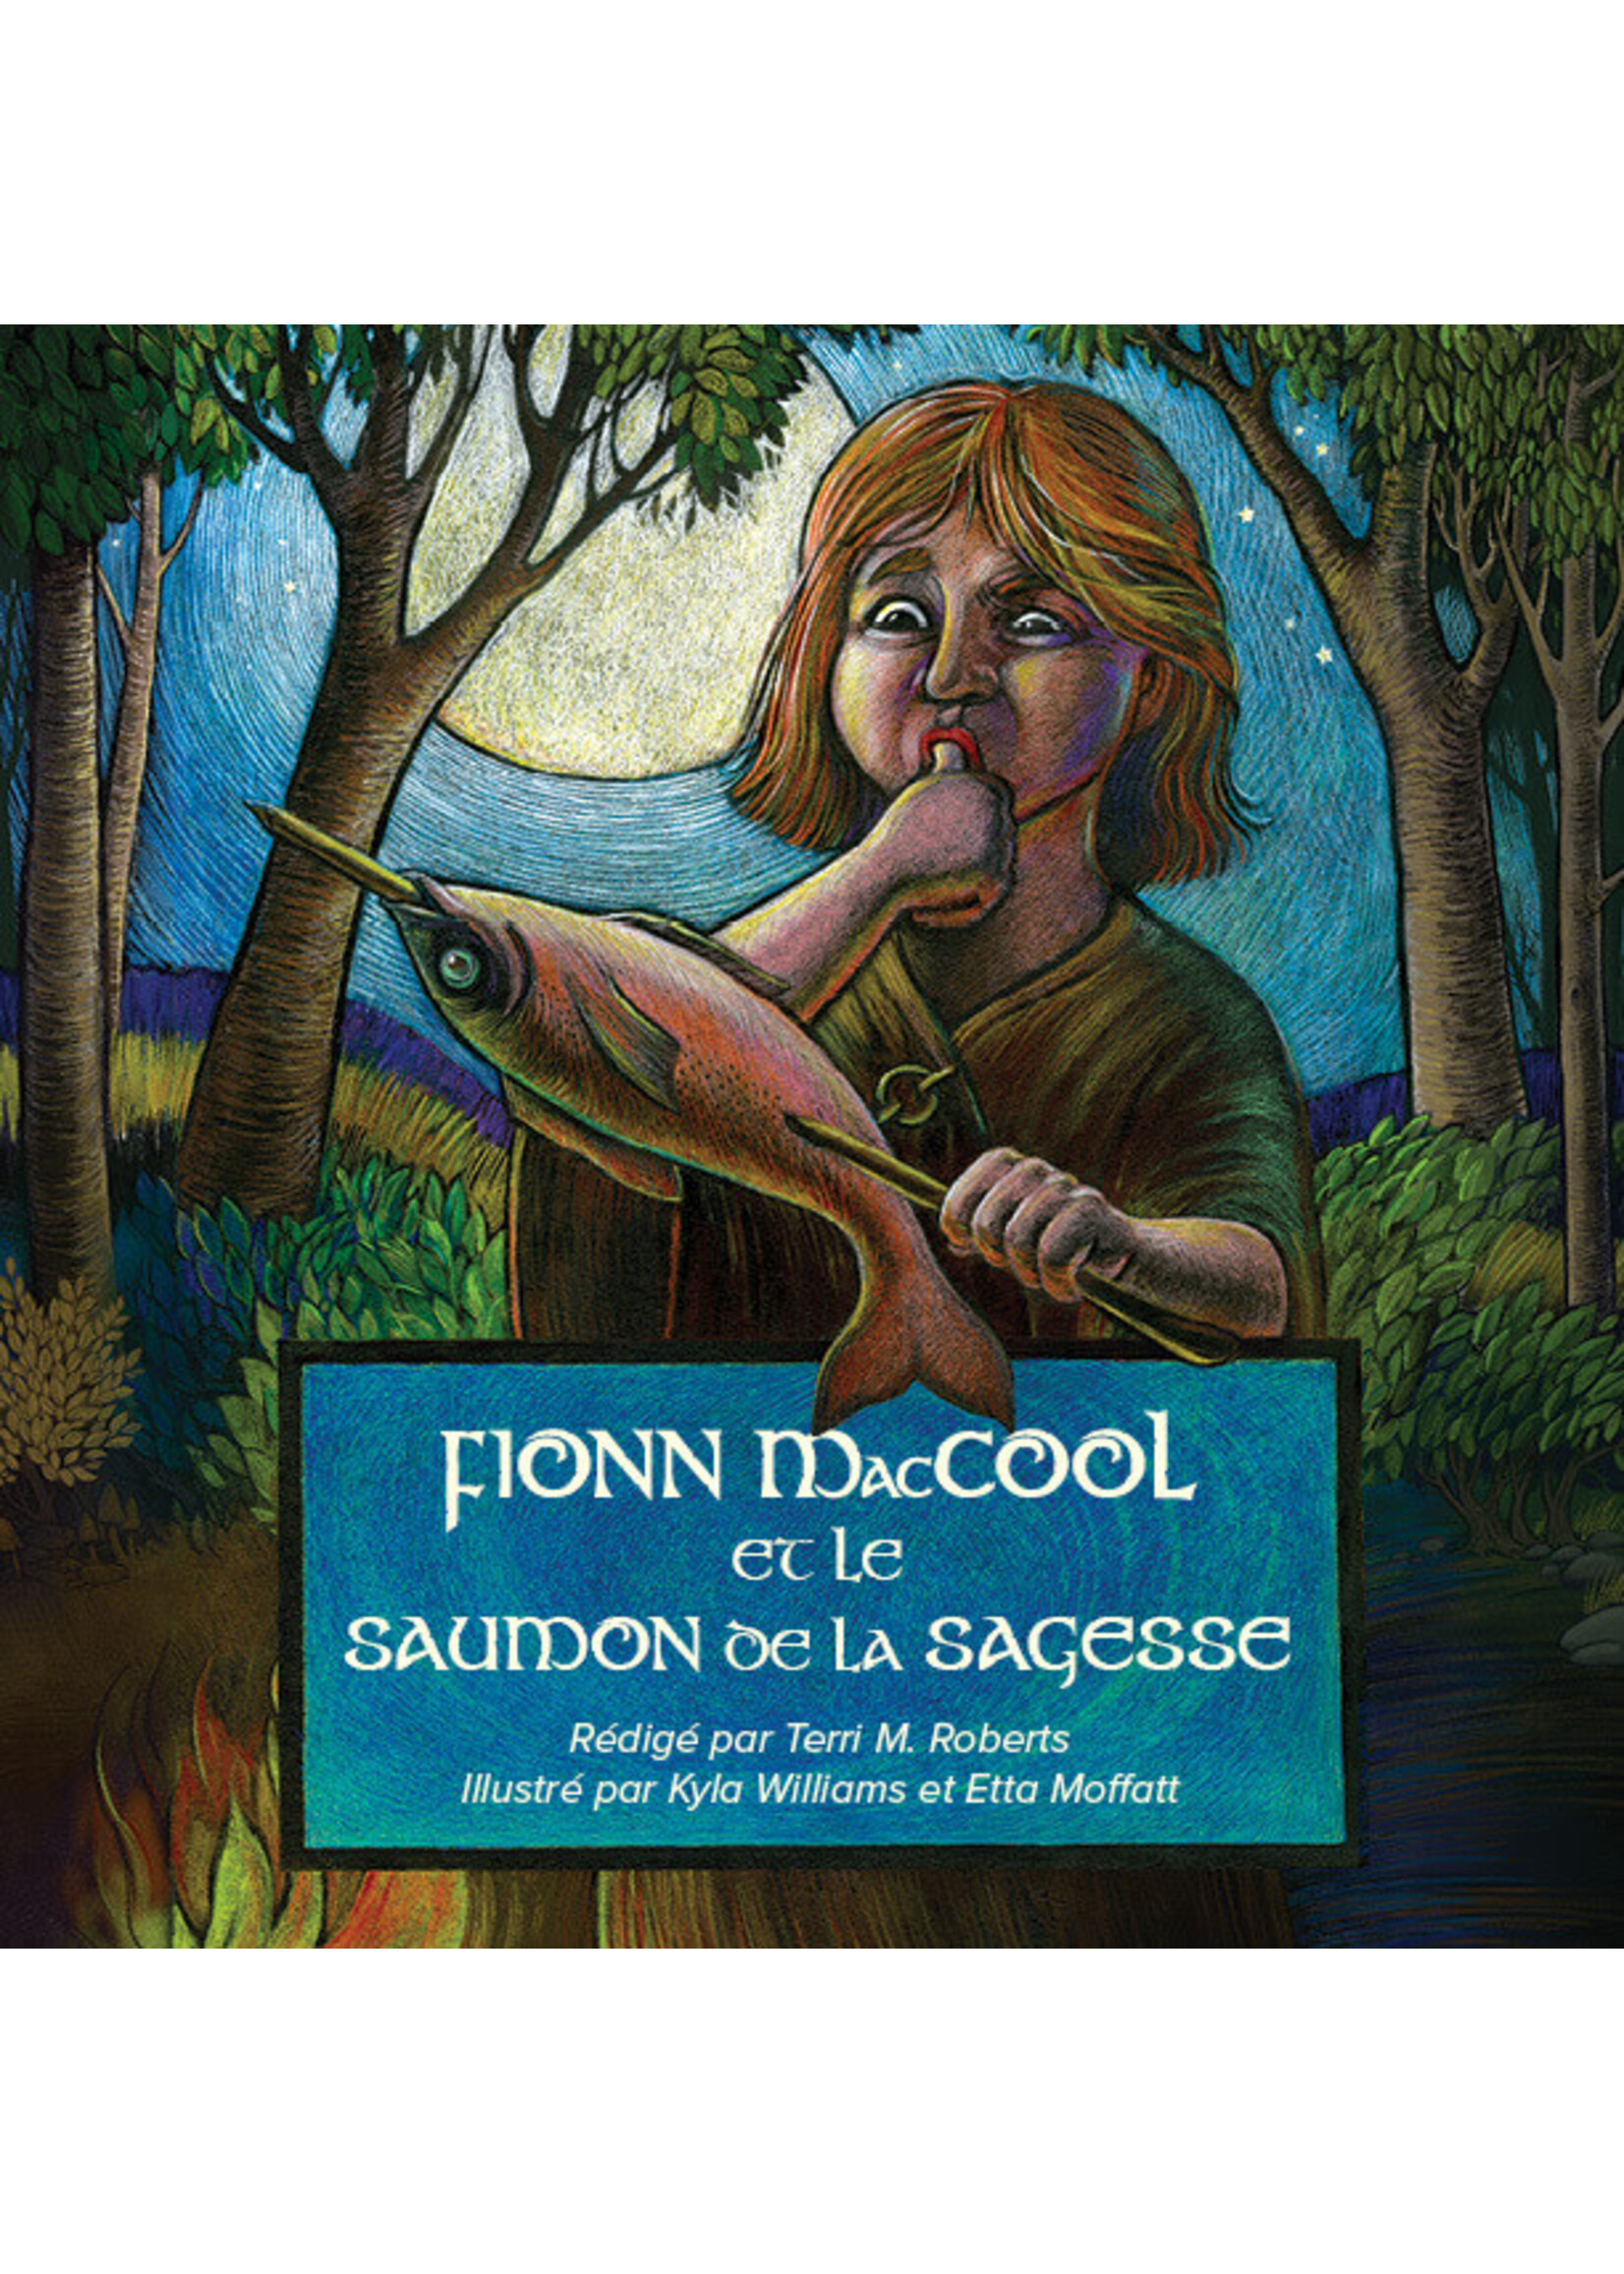 Fionn MacCool et le saumon de la sagesse by Terri M. Roberts, Kyla Williams, and Etta Moffatt